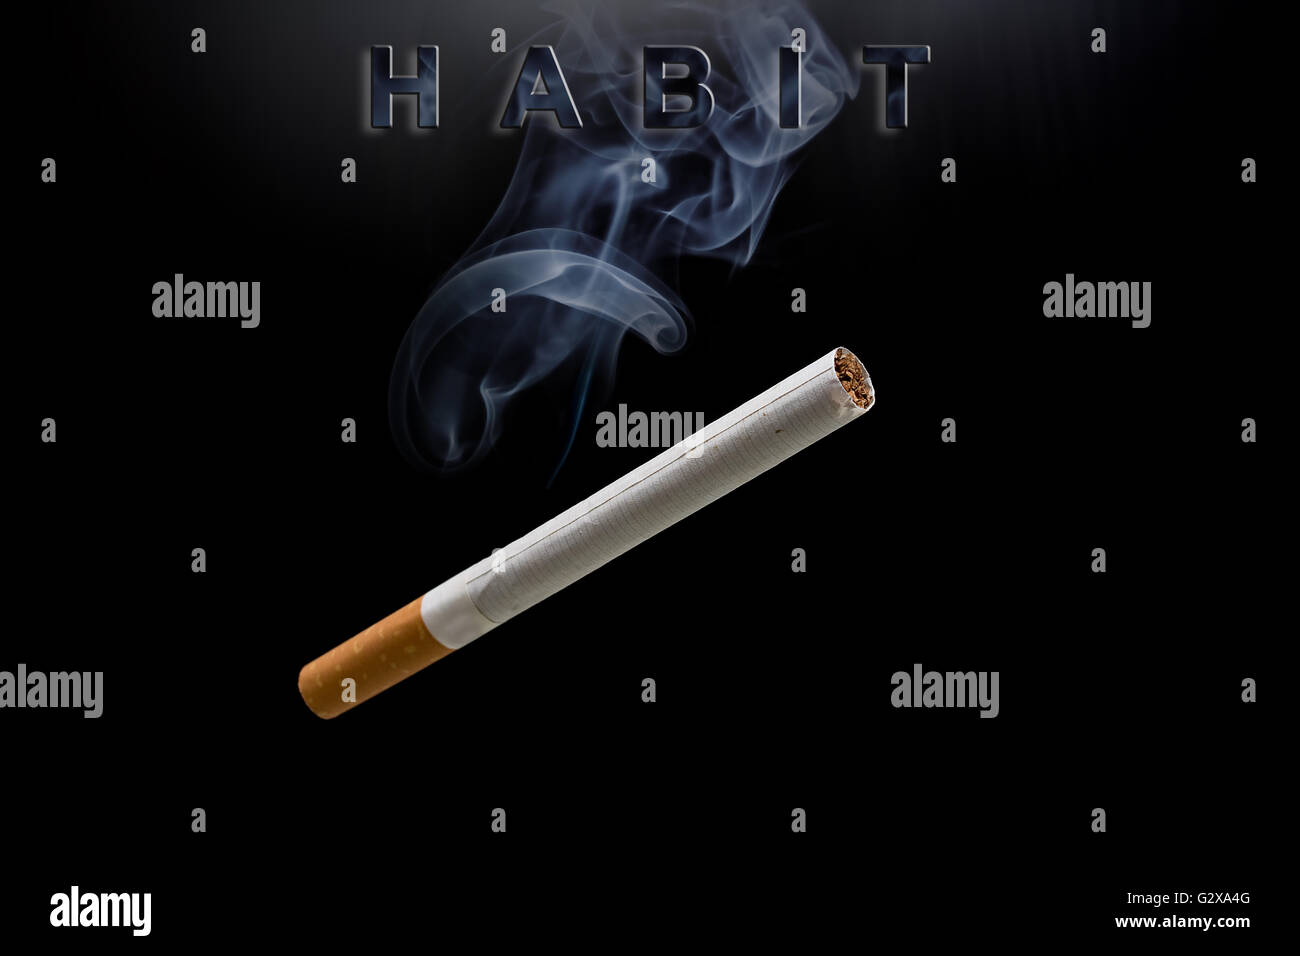 cigarette, smoke and text habit Stock Photo